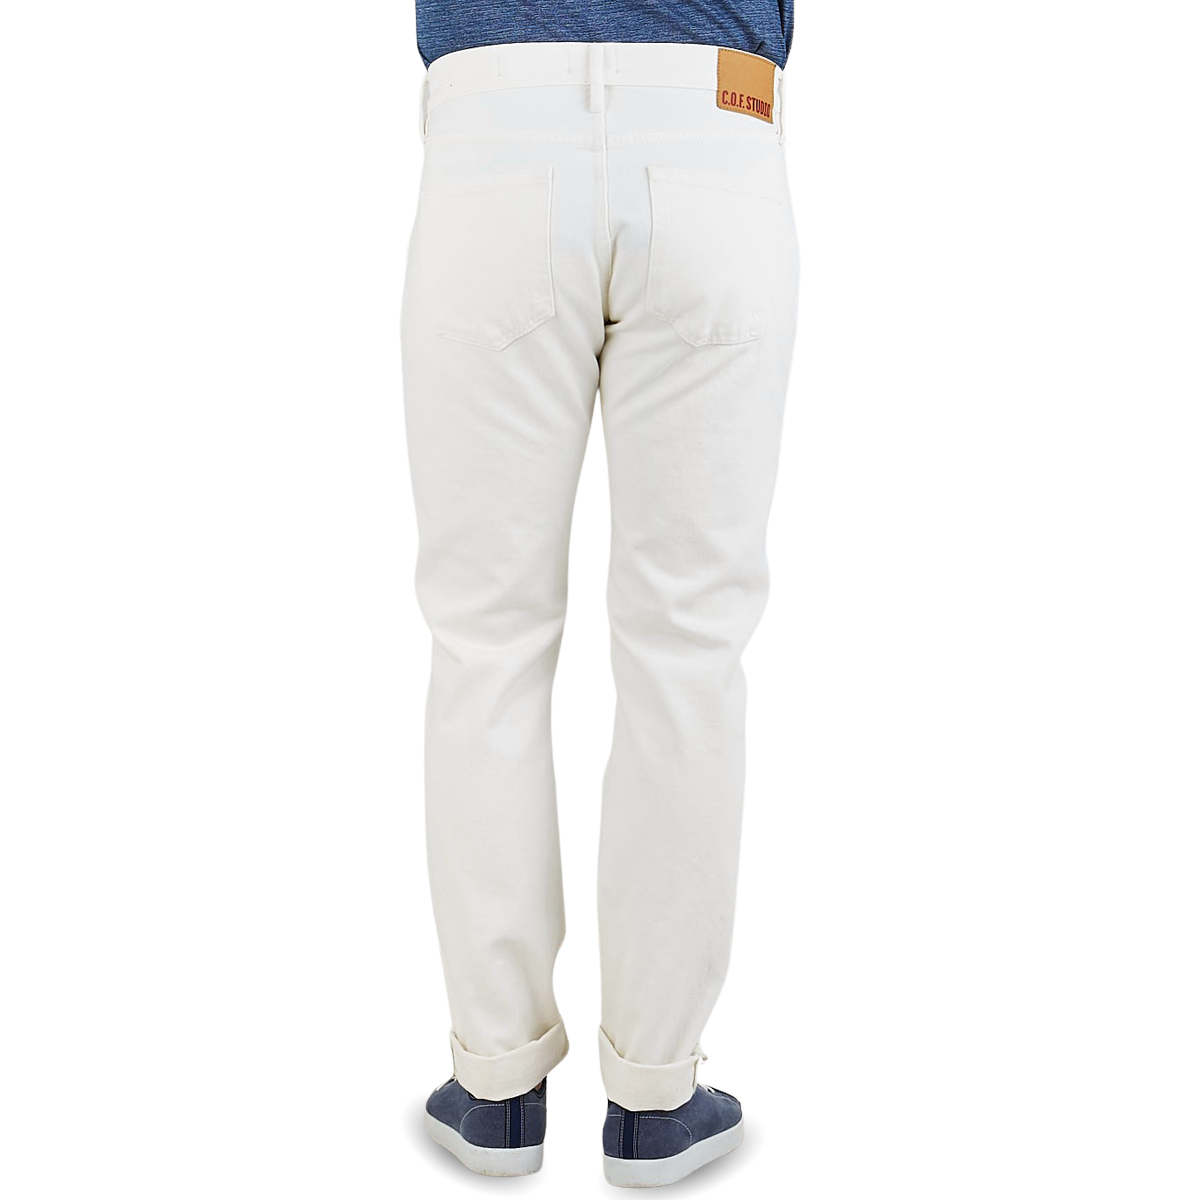 The back view of a man wearing C.O.F Studio's Ecru Stone Washed Kuroki Cotton M7 Jeans.